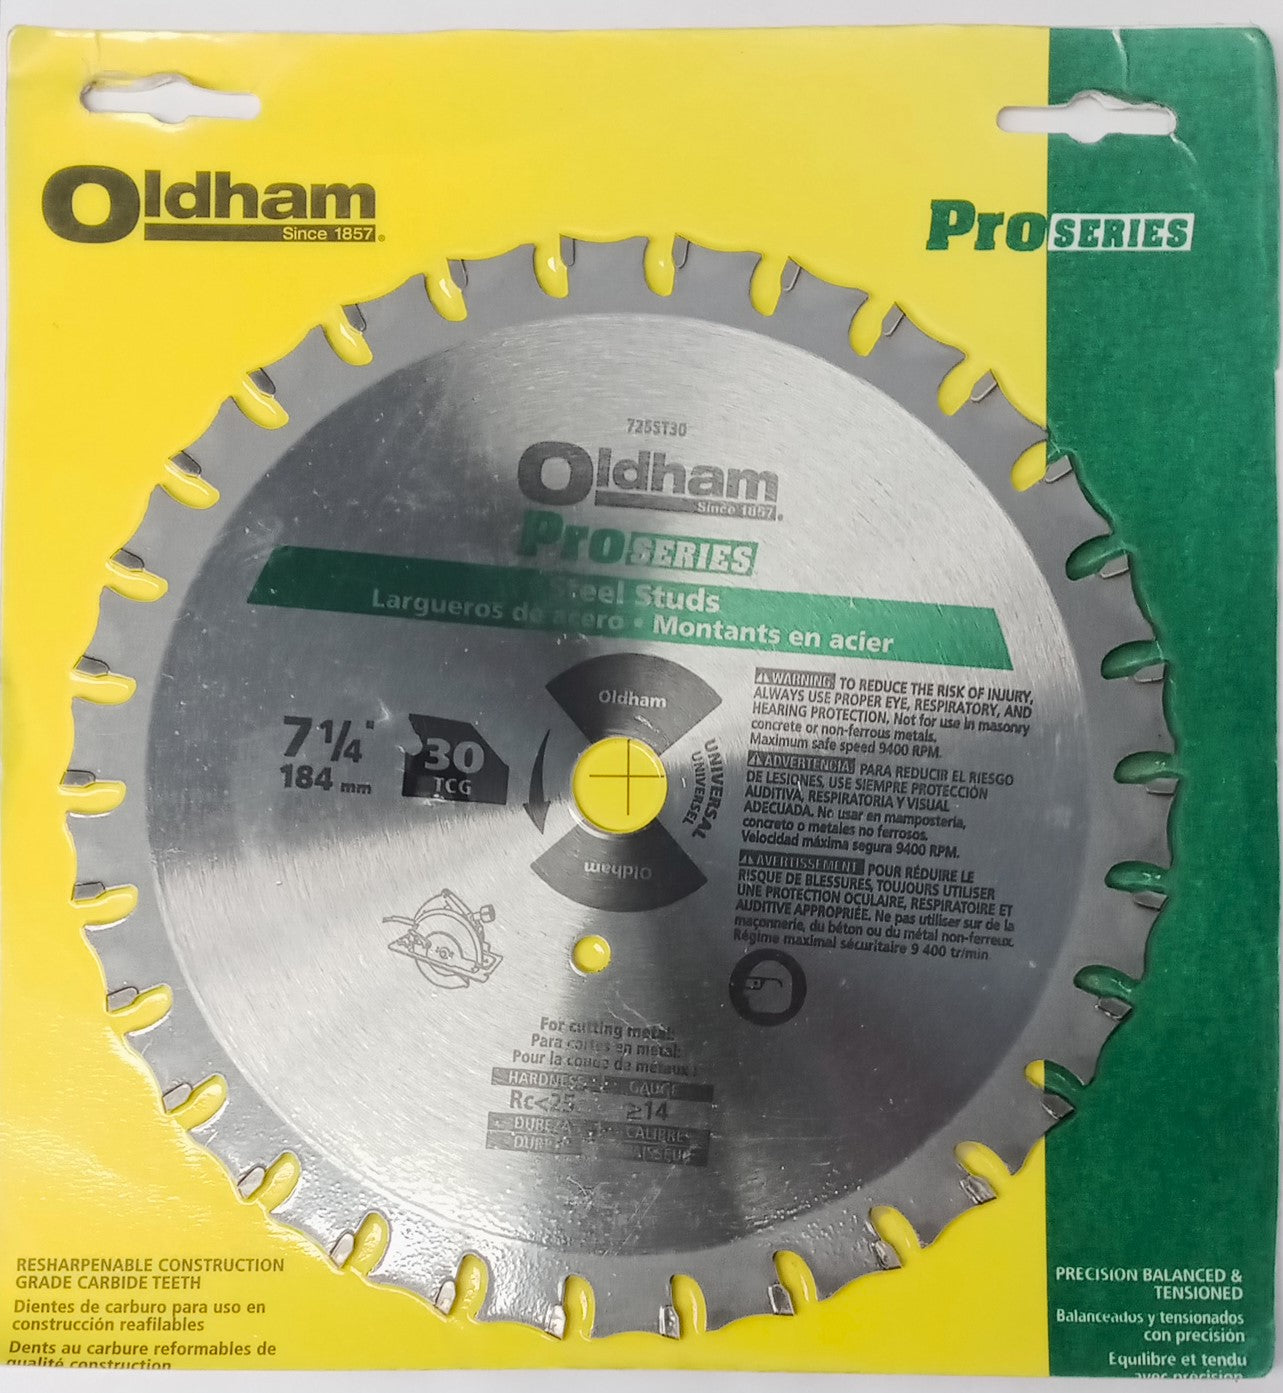 Oldham 7255ST30 Metal Cutting 7-1/4" (184mm) 30T Circular Saw Blade